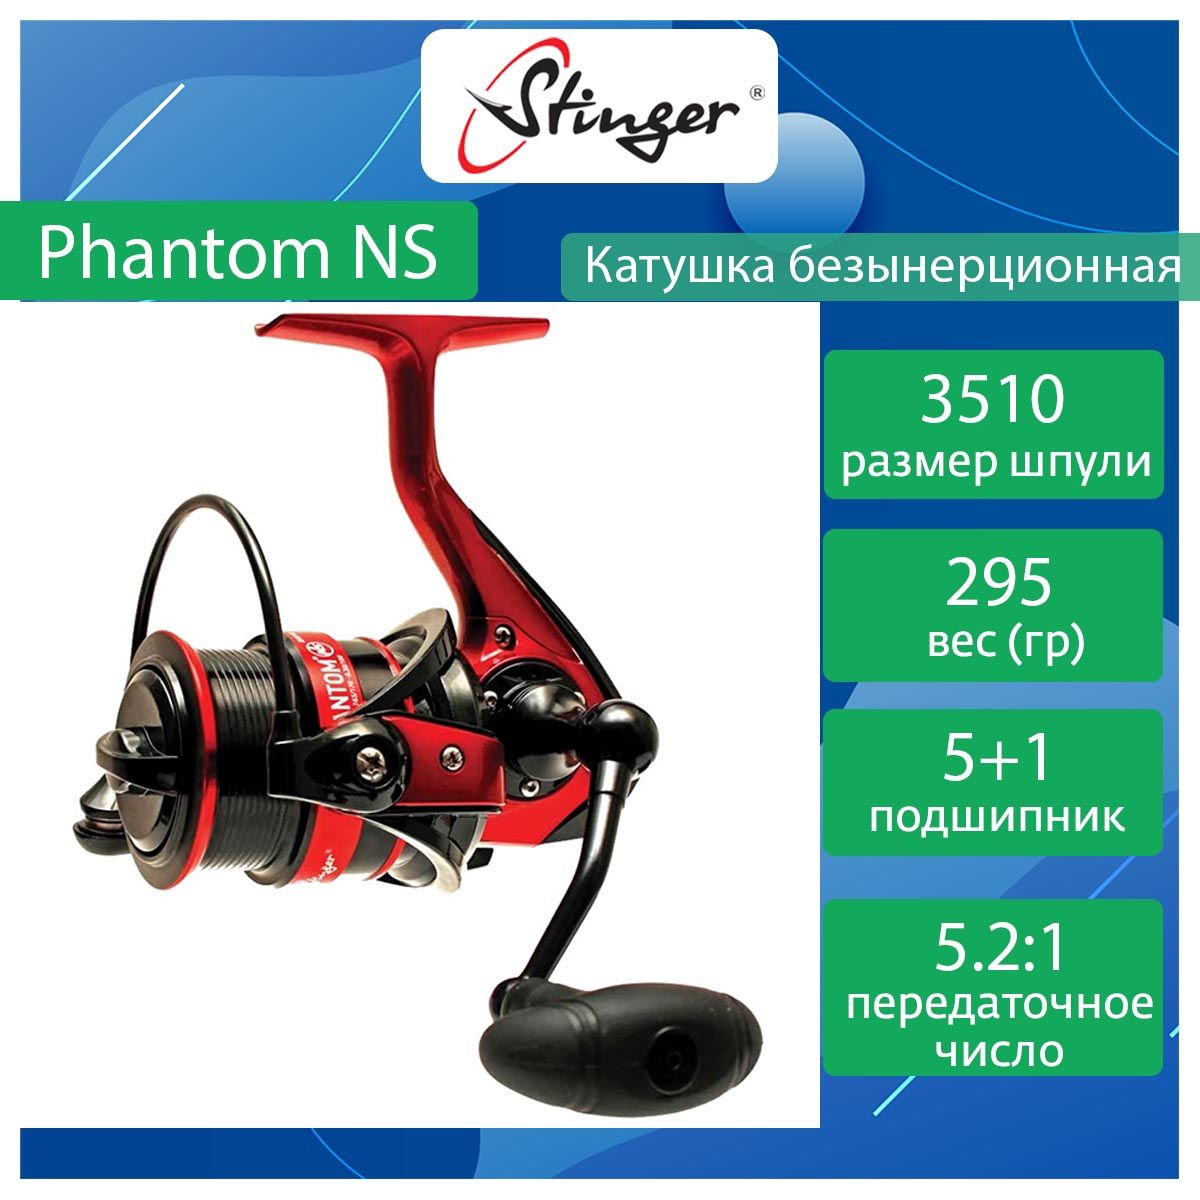 Катушка для рыбалки безынерционная Stinger Phantom NS ef53286